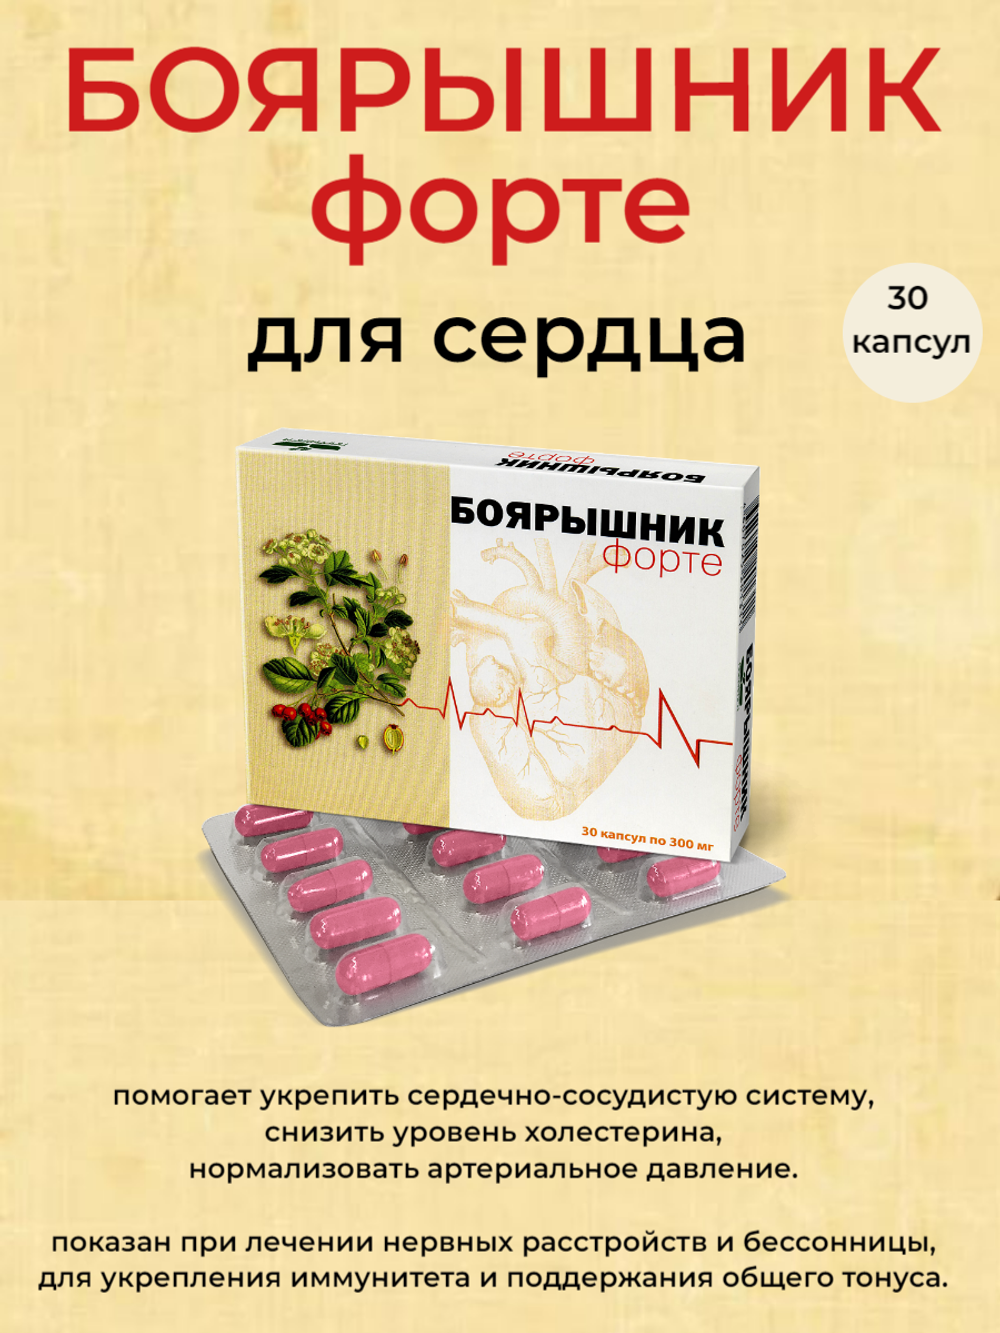 Боярышник-Форте для сердца, 30 капсул по 300 мг